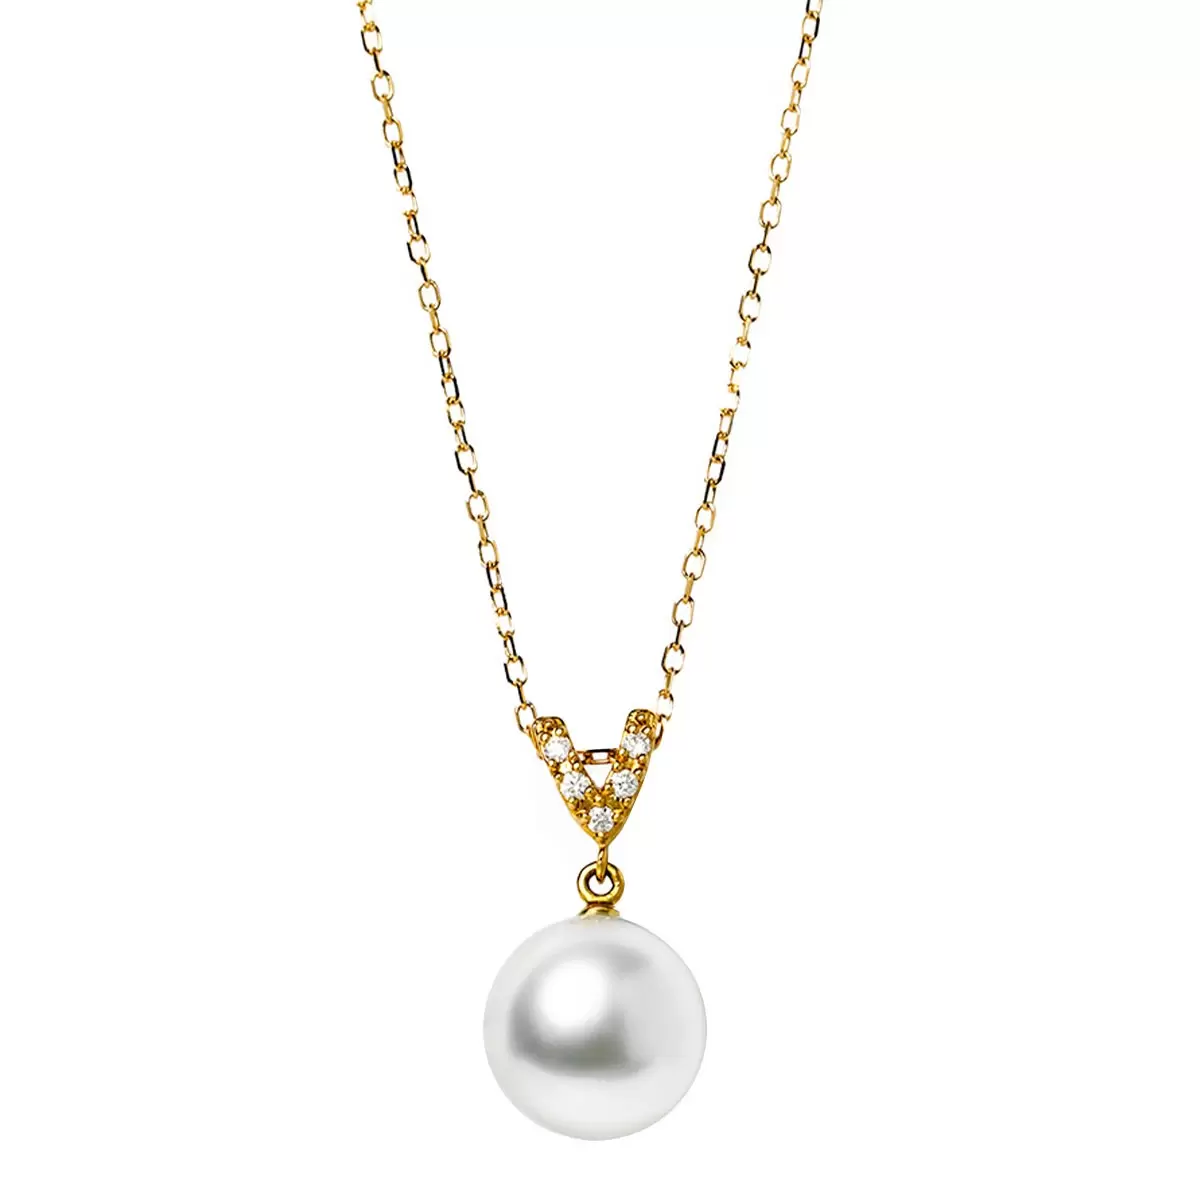 Tokyo Pearl 18K黃K金 9.0公釐 - 10.0公釐 南海白珍珠項鍊